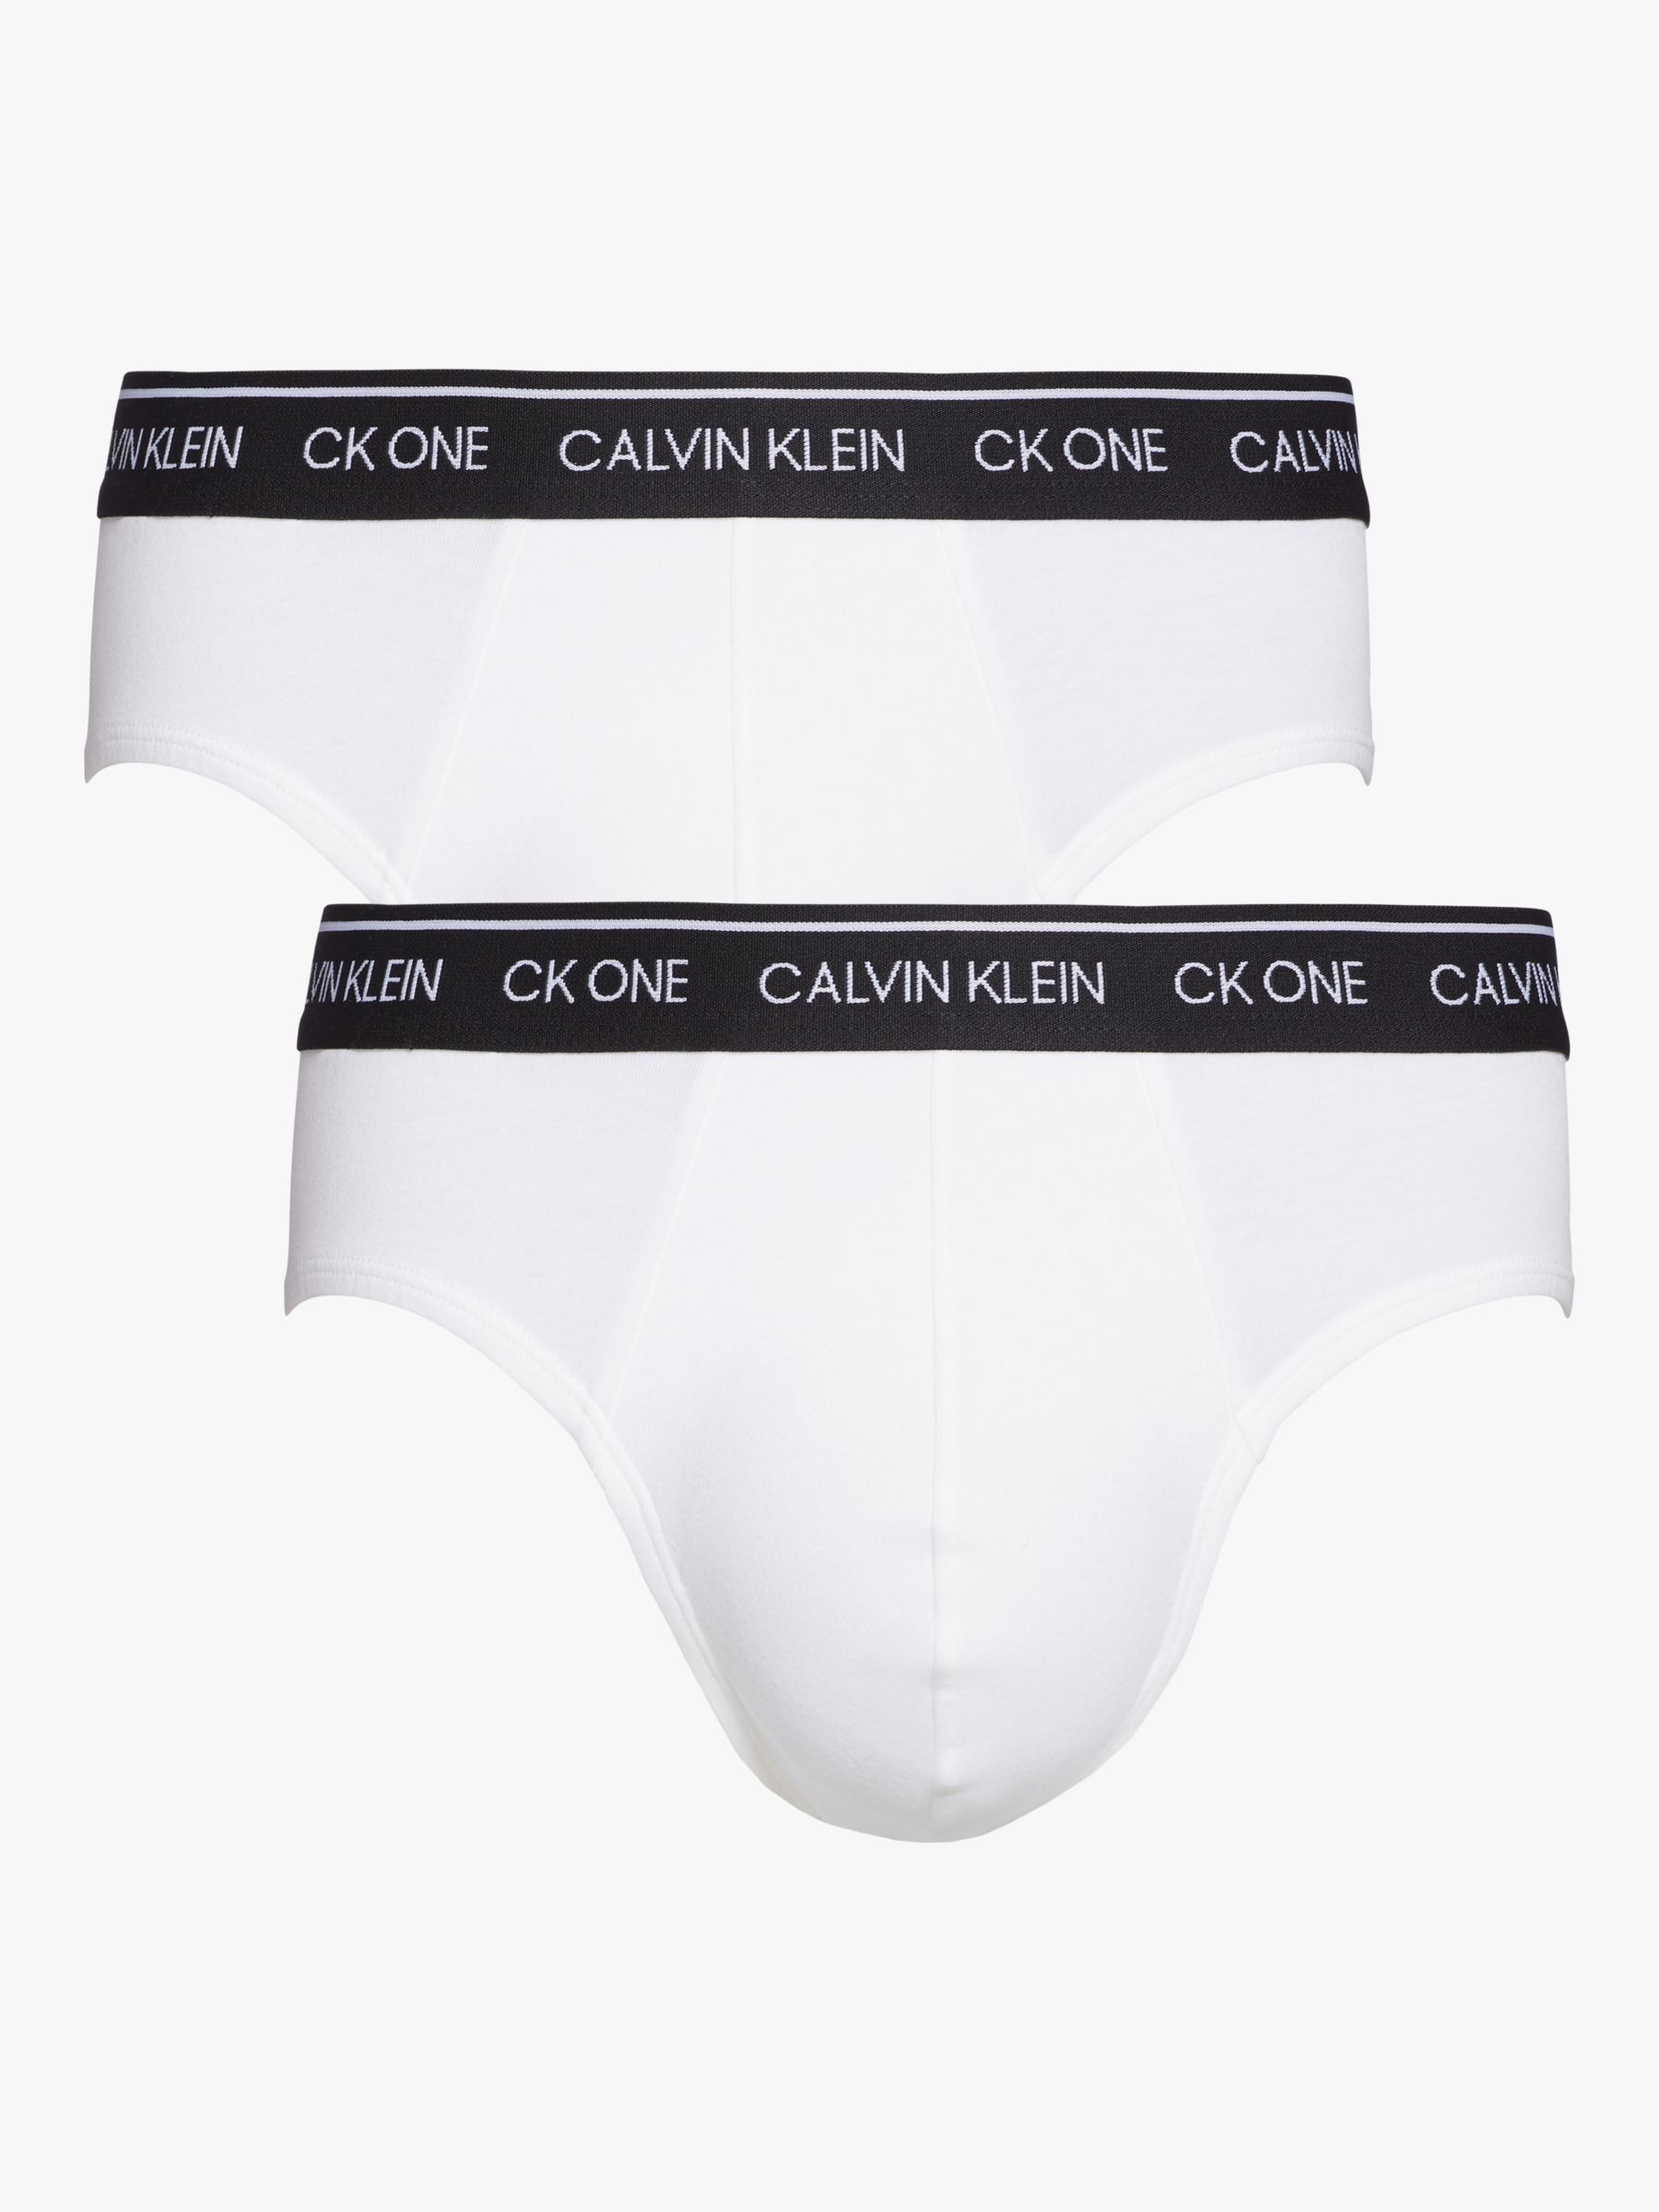 Calvin Klein One CK Cotton Stretch Briefs, Pack of 2, White at John ...